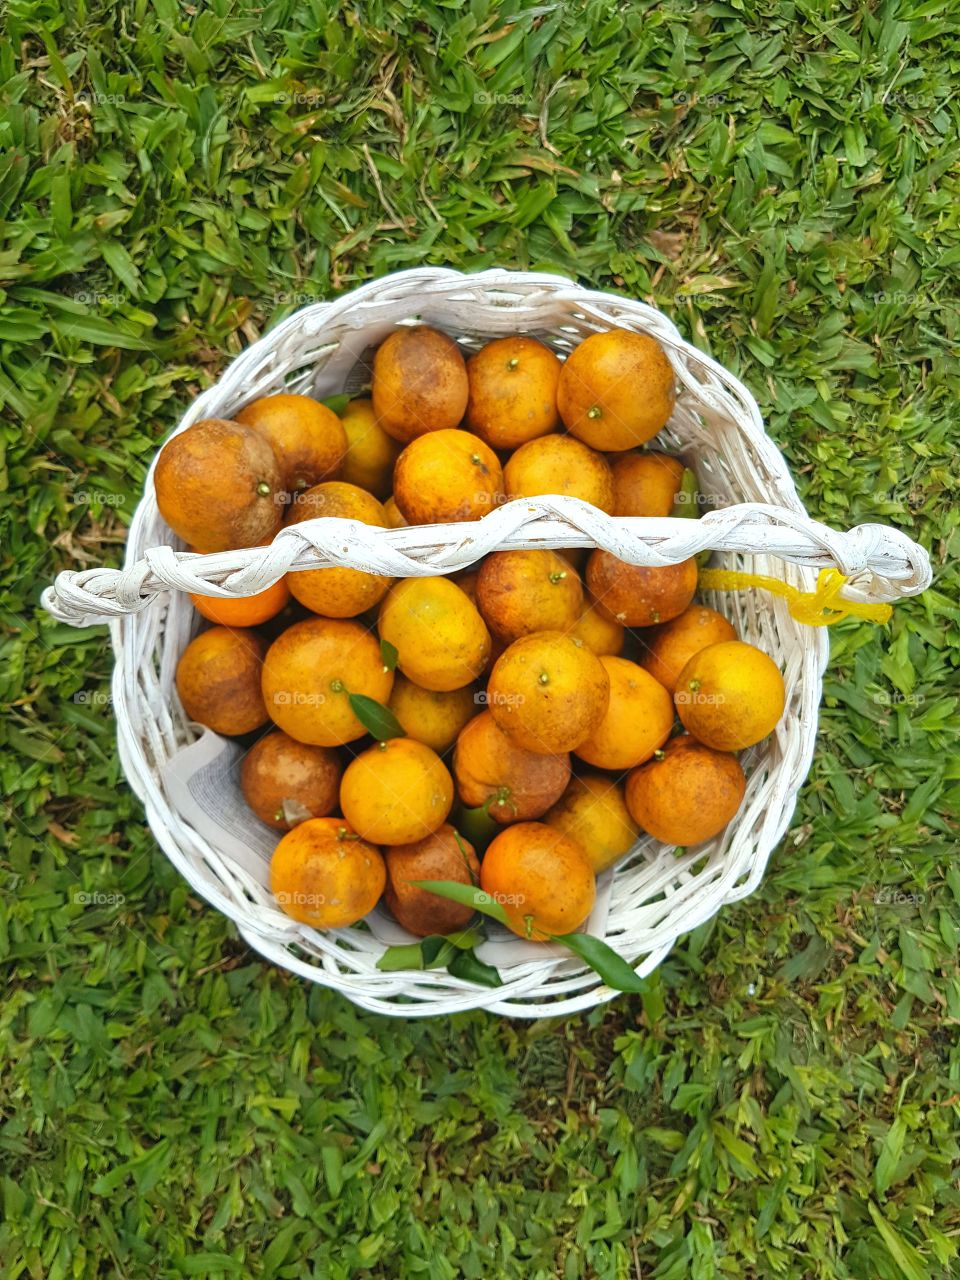 Orange fruits in basket on grassy land